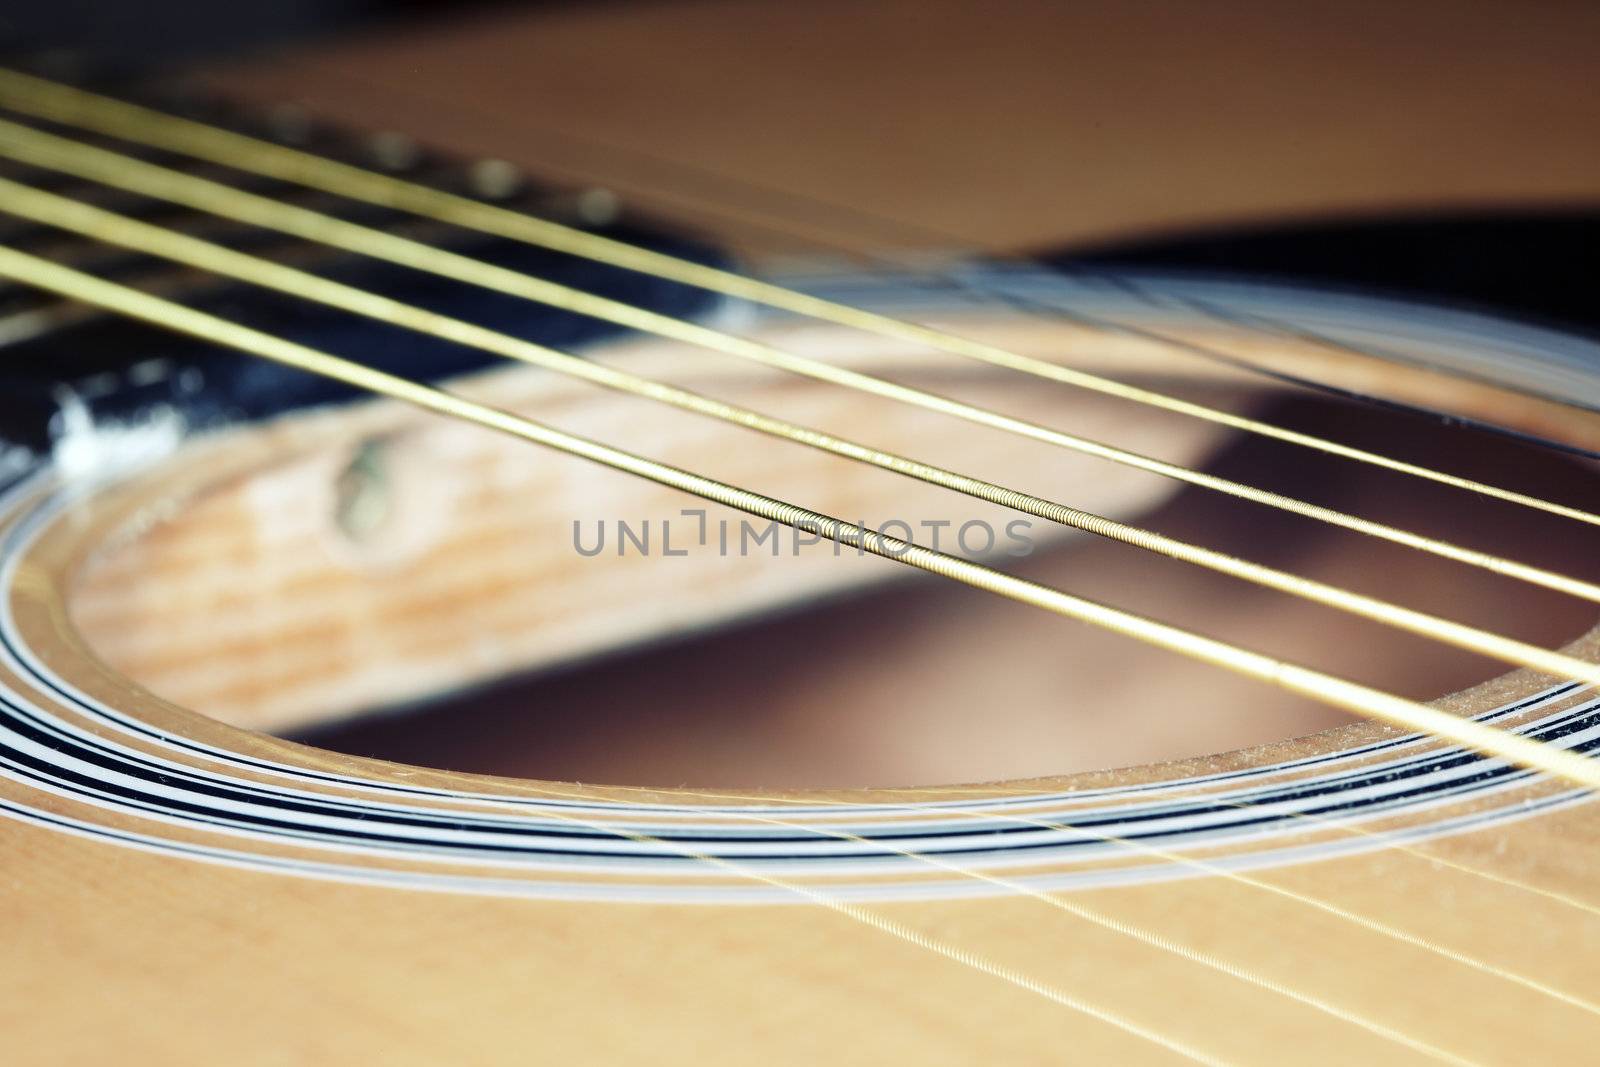 Guitar strings by Novic